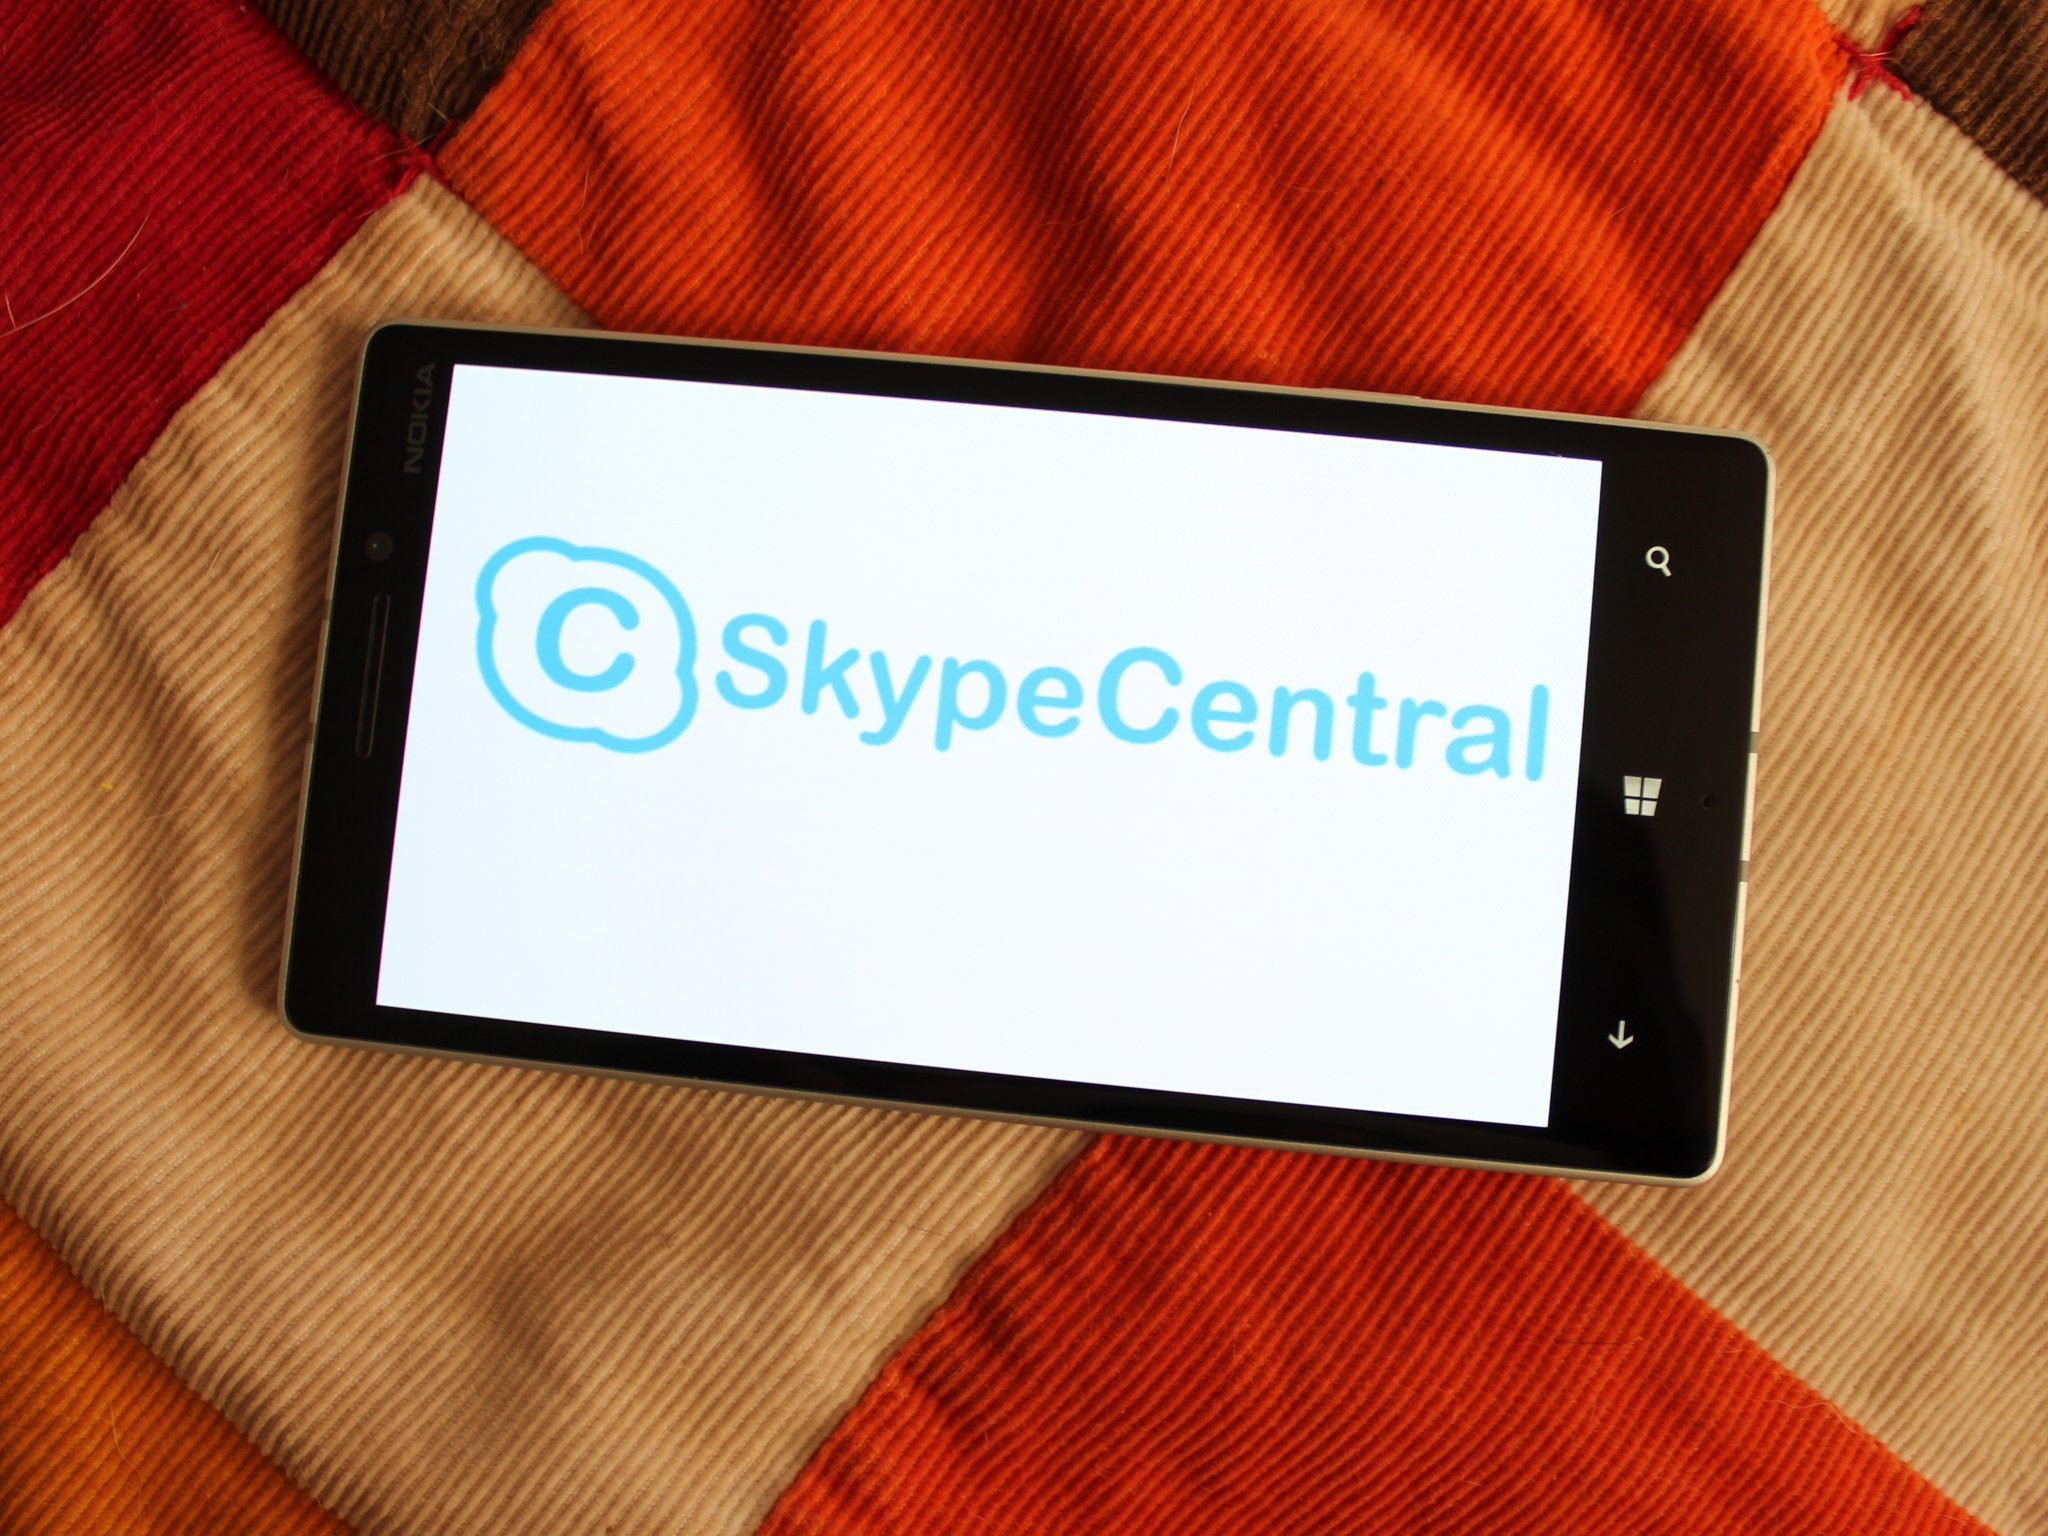 skypecentral-logo-on-phone.jpg